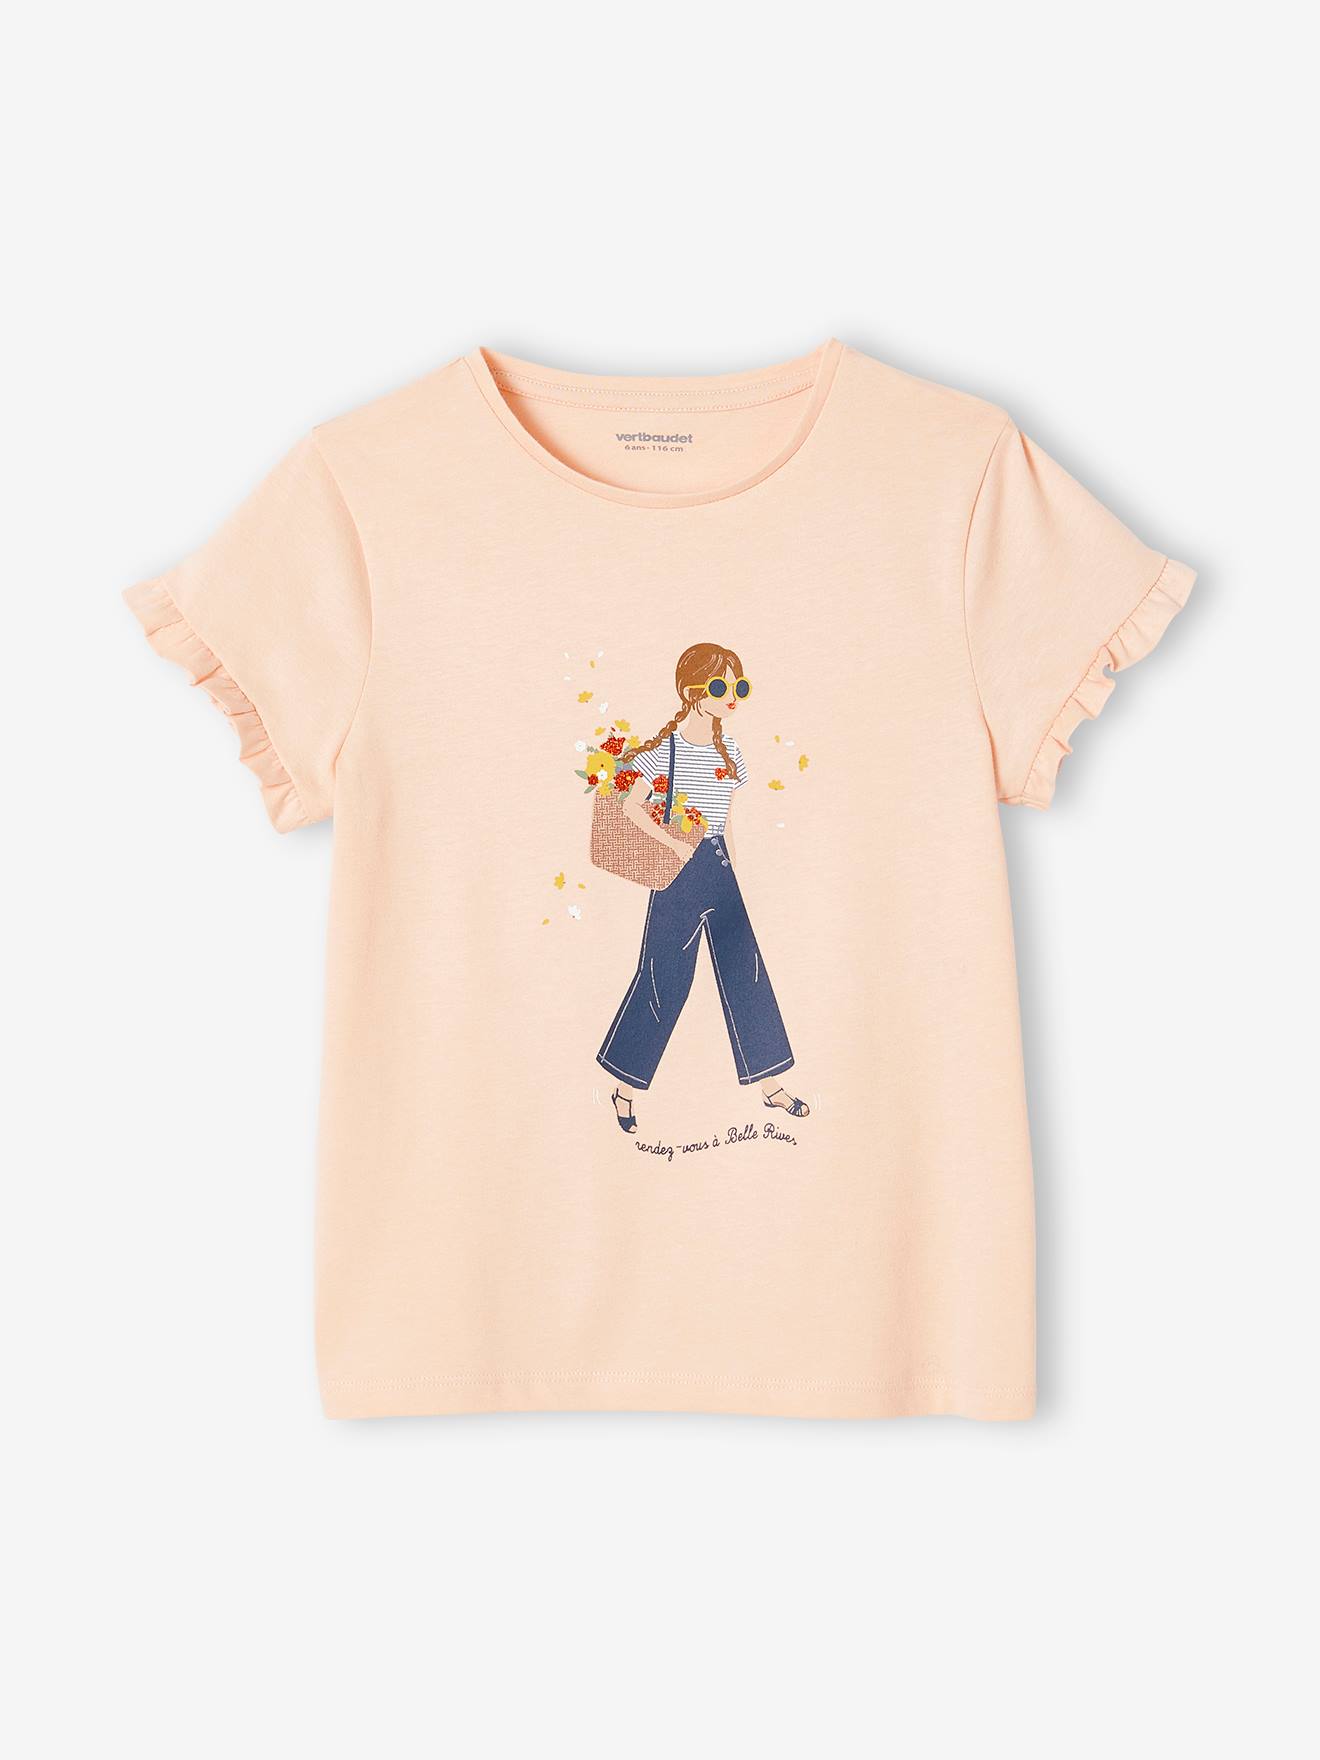 VERTBAUDET Camiseta con motivo "à bicyclette" para niña rosa rosa pálido